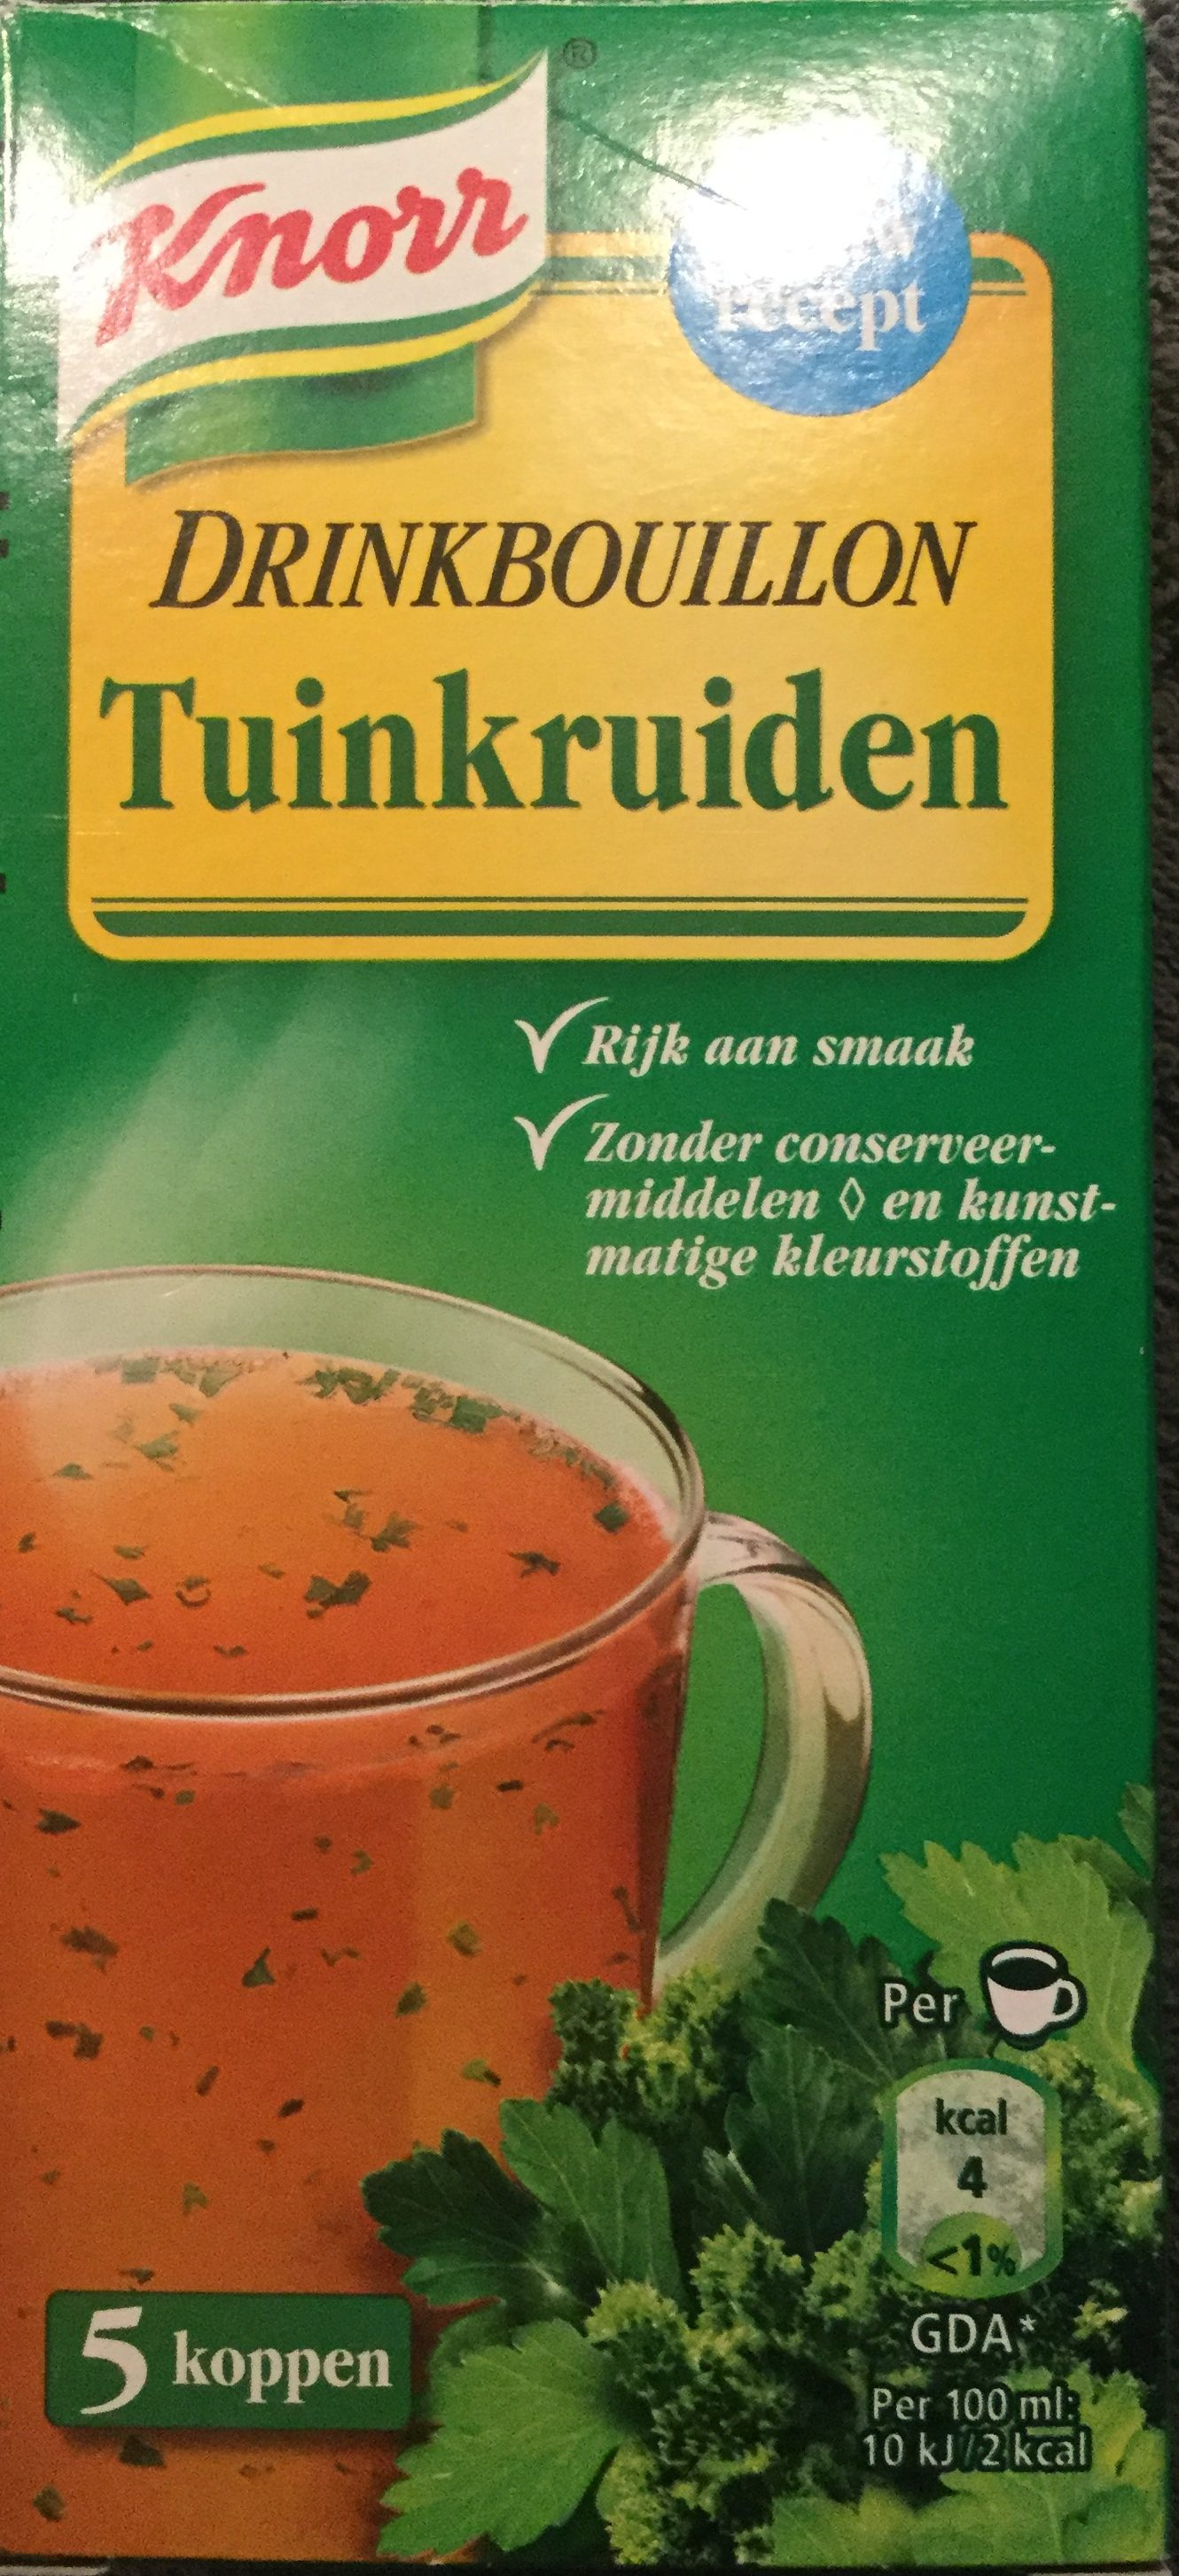 Knorr drinkbouillon Tuinkruiden - Product